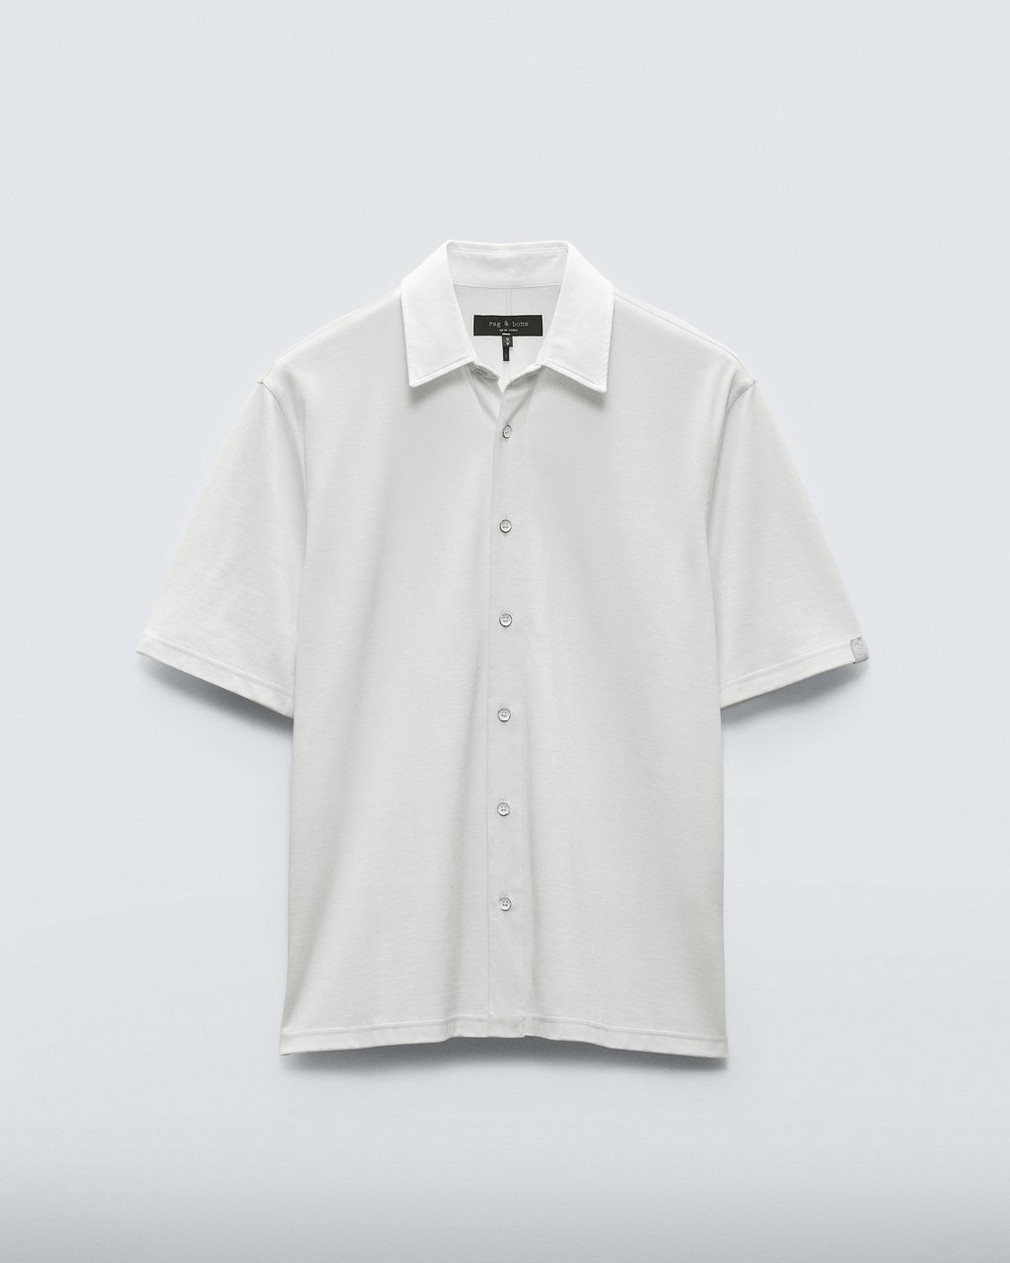 Dalton Knit Cupro Shirt